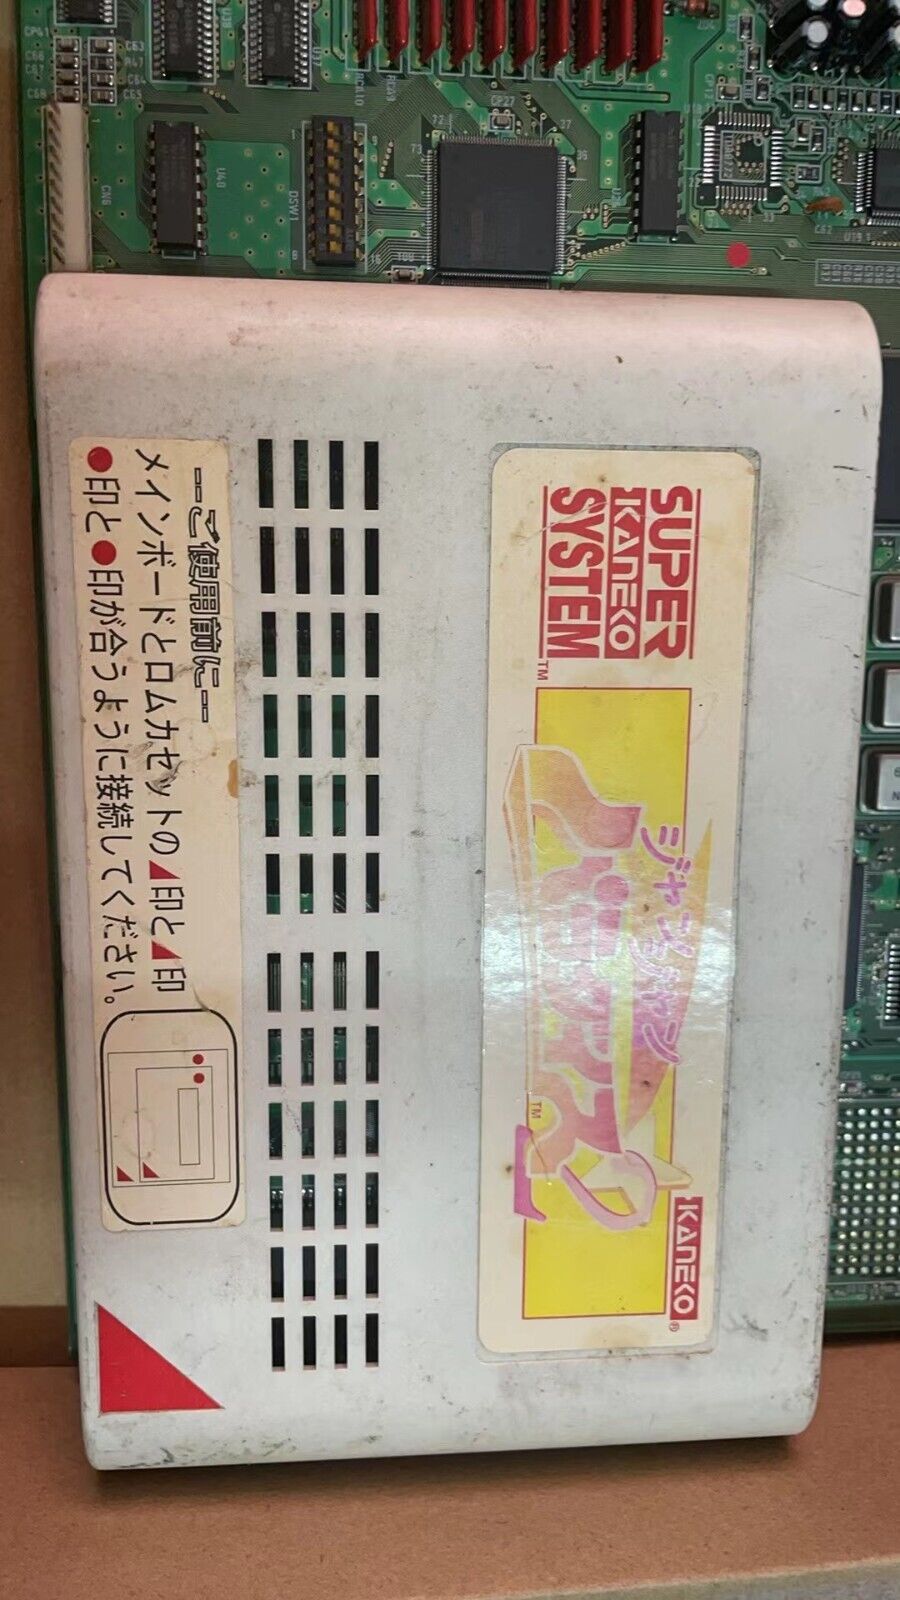 Kaneko jamma arcade game card Jan Jan Paradise 2(not include motherboard)